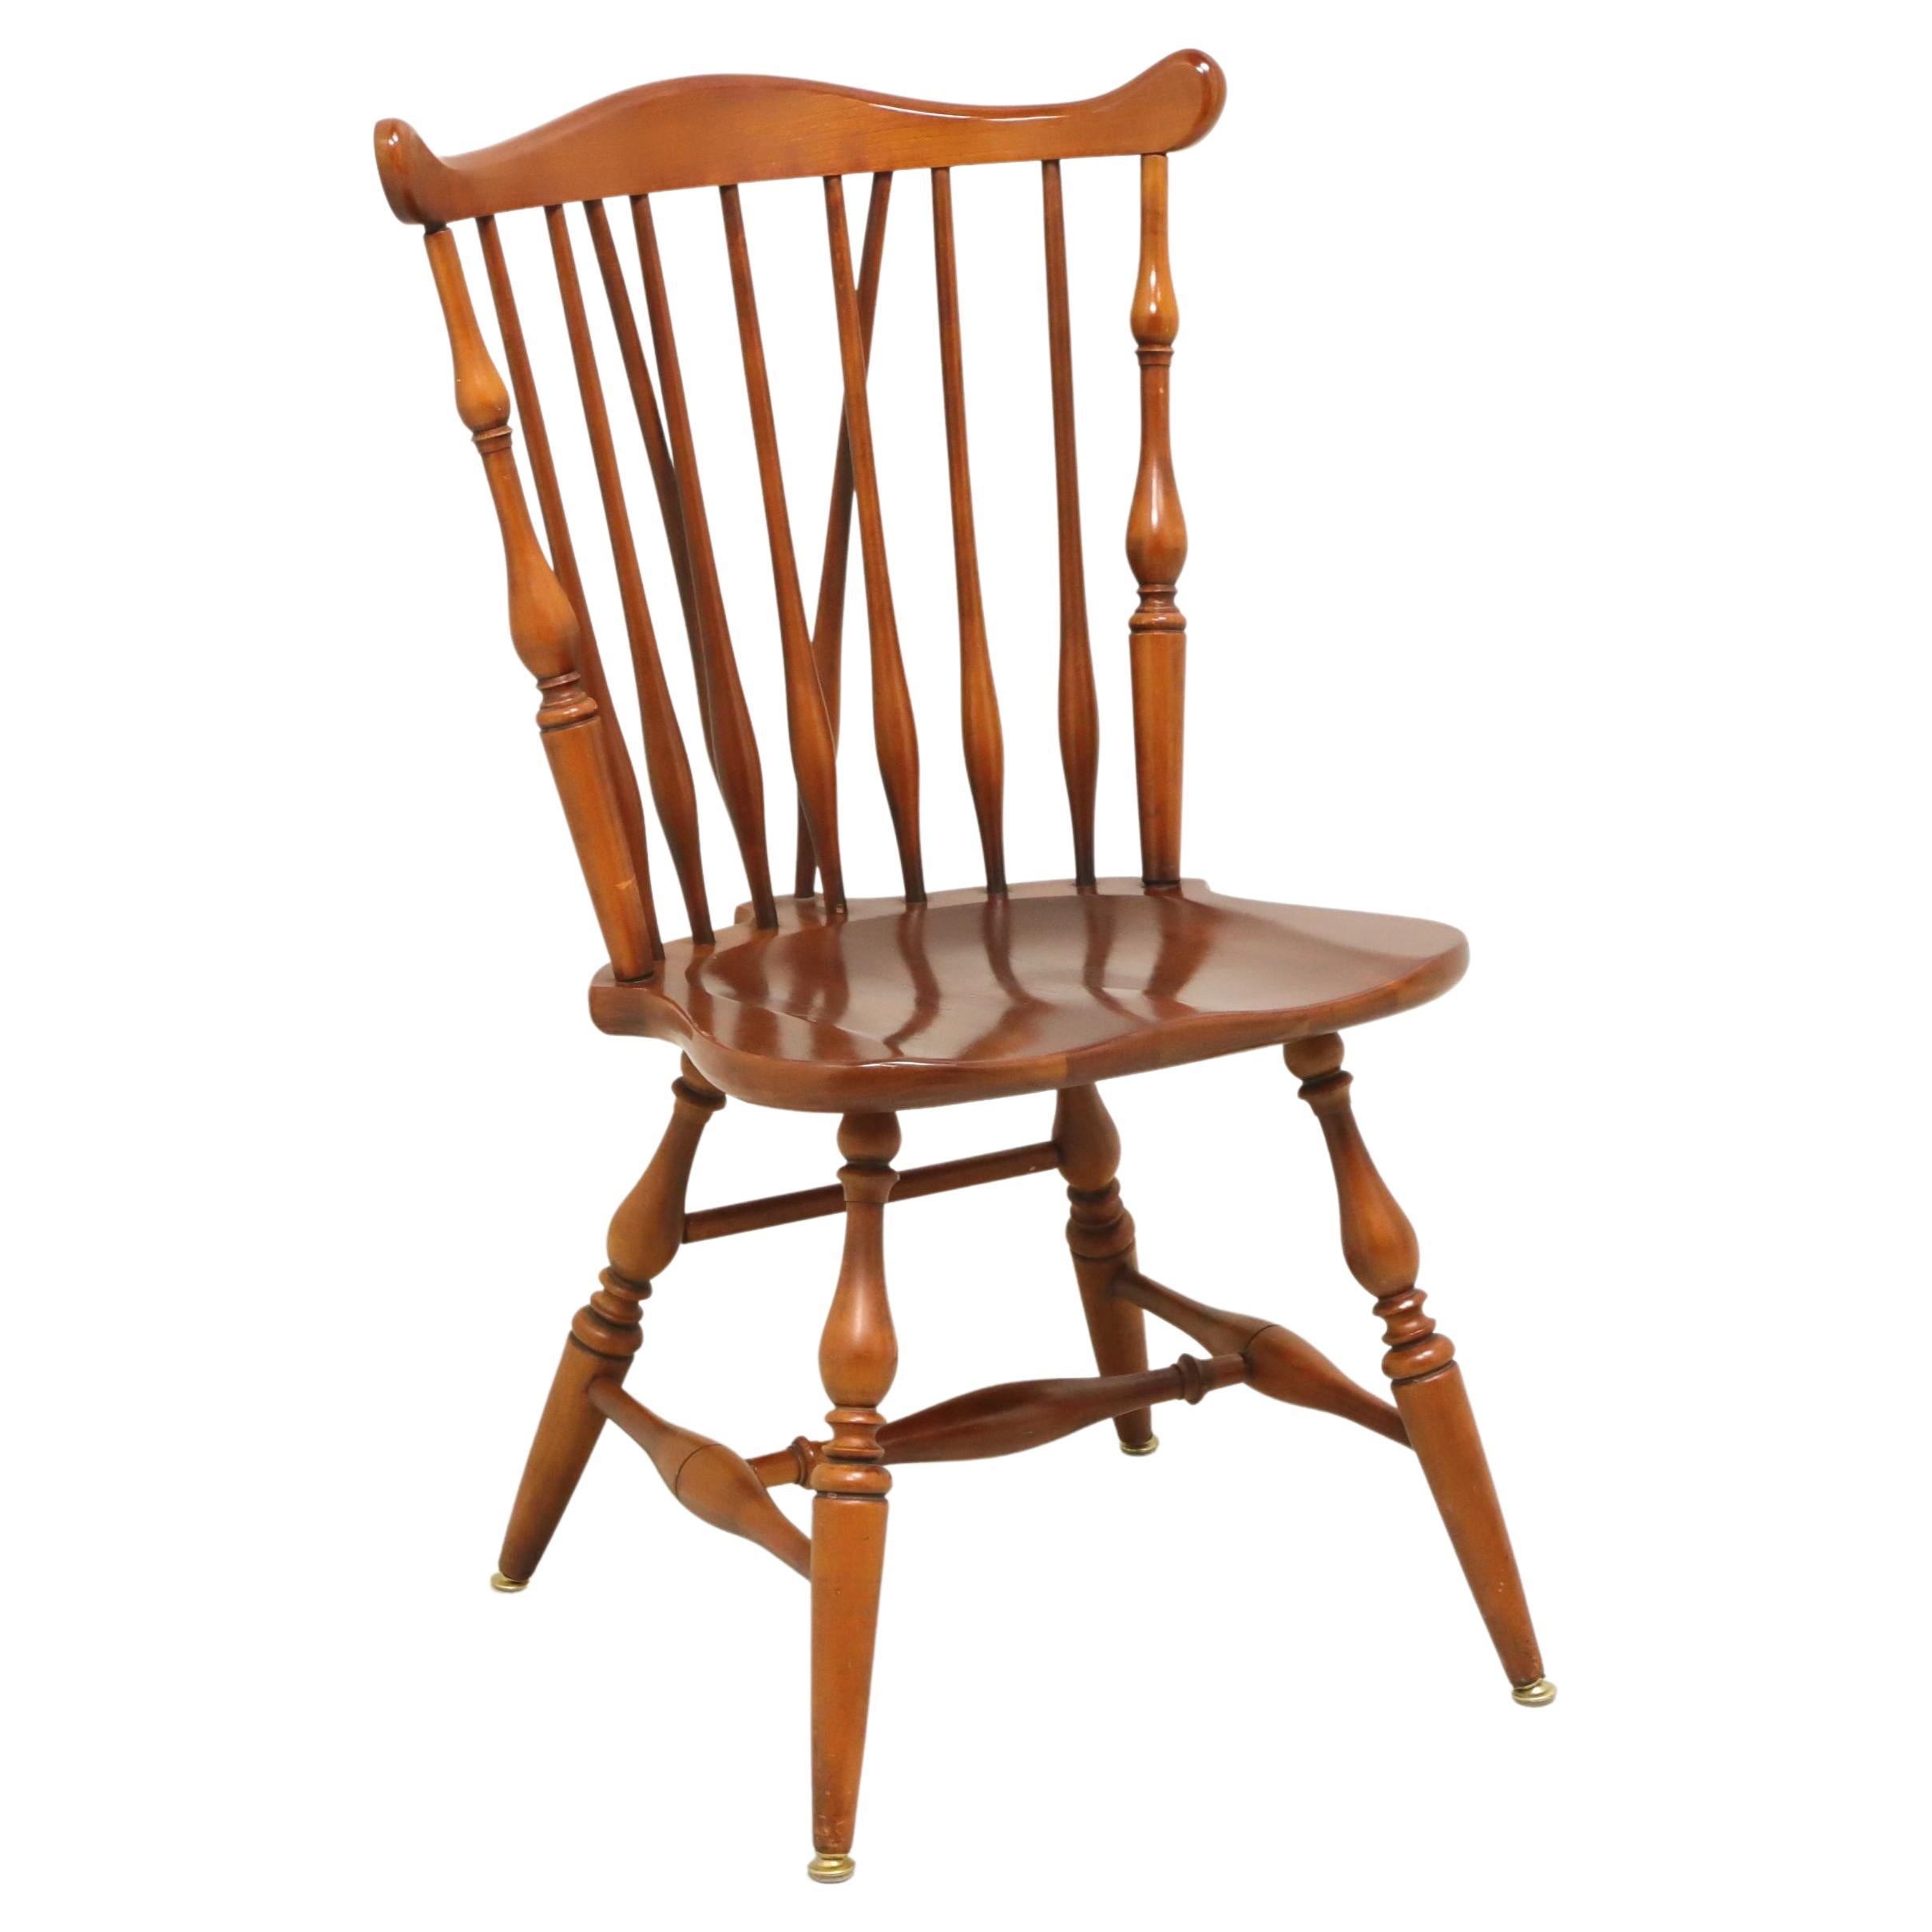 ETHAN ALLEN Duxbury Maple Windsor Dining Side Chair - A